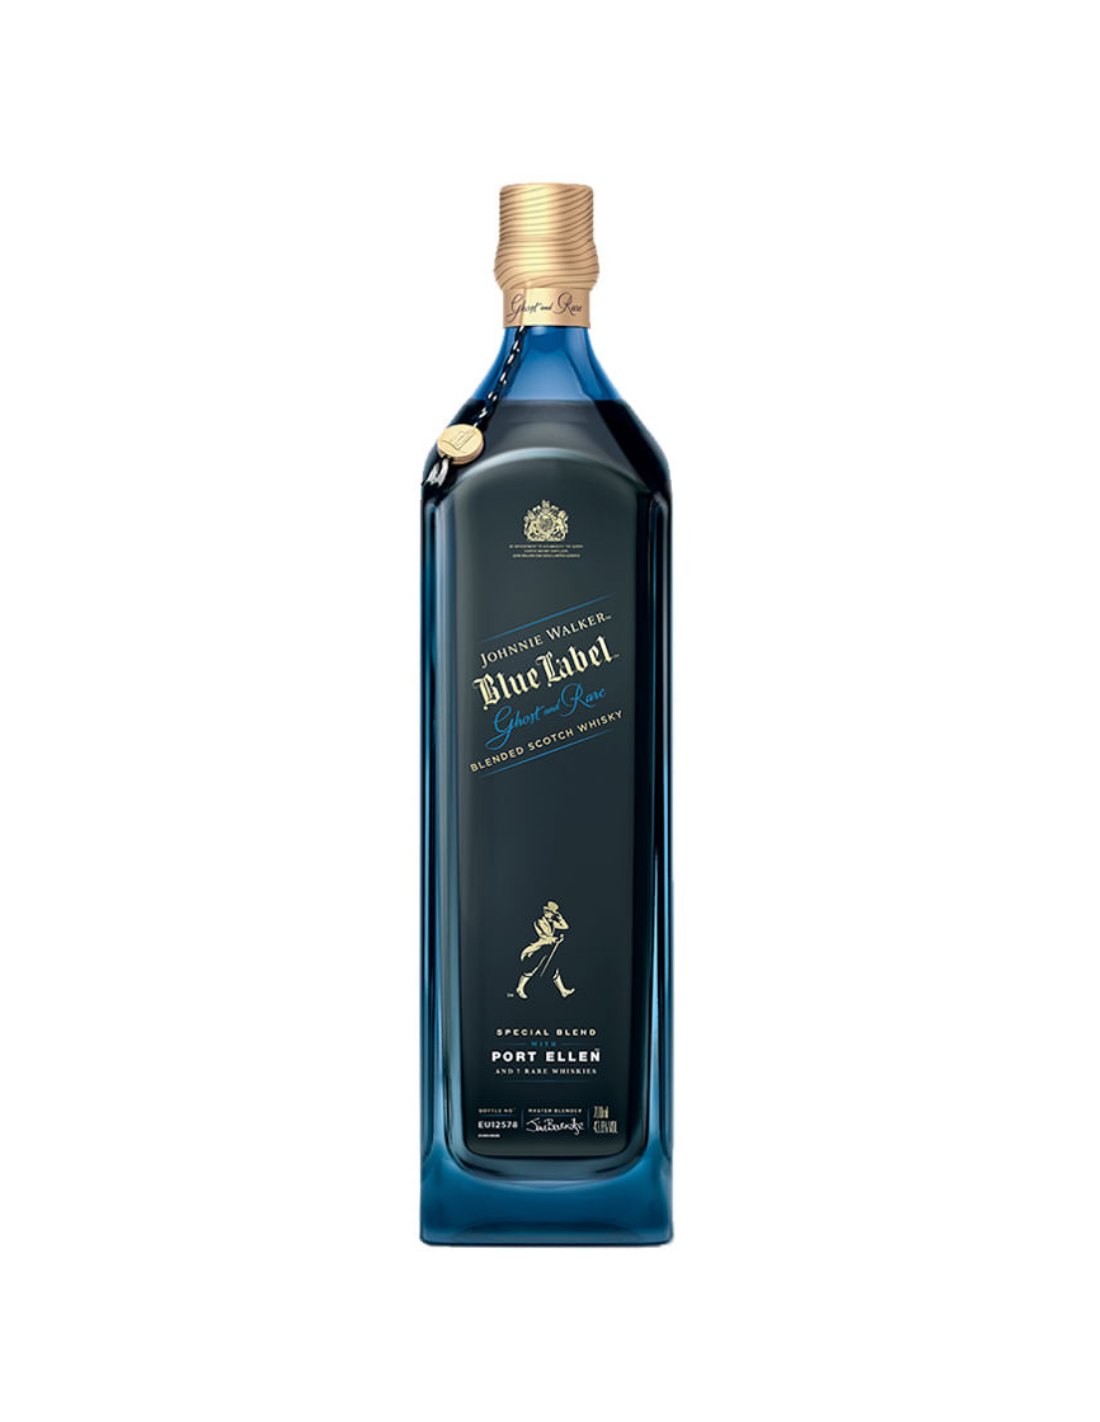 Whisky Johnnie Walker Blue Label Ghost and Rare Port Ellen, 0.7L, 43.8% alc., Marea Britanie alcooldiscount.ro